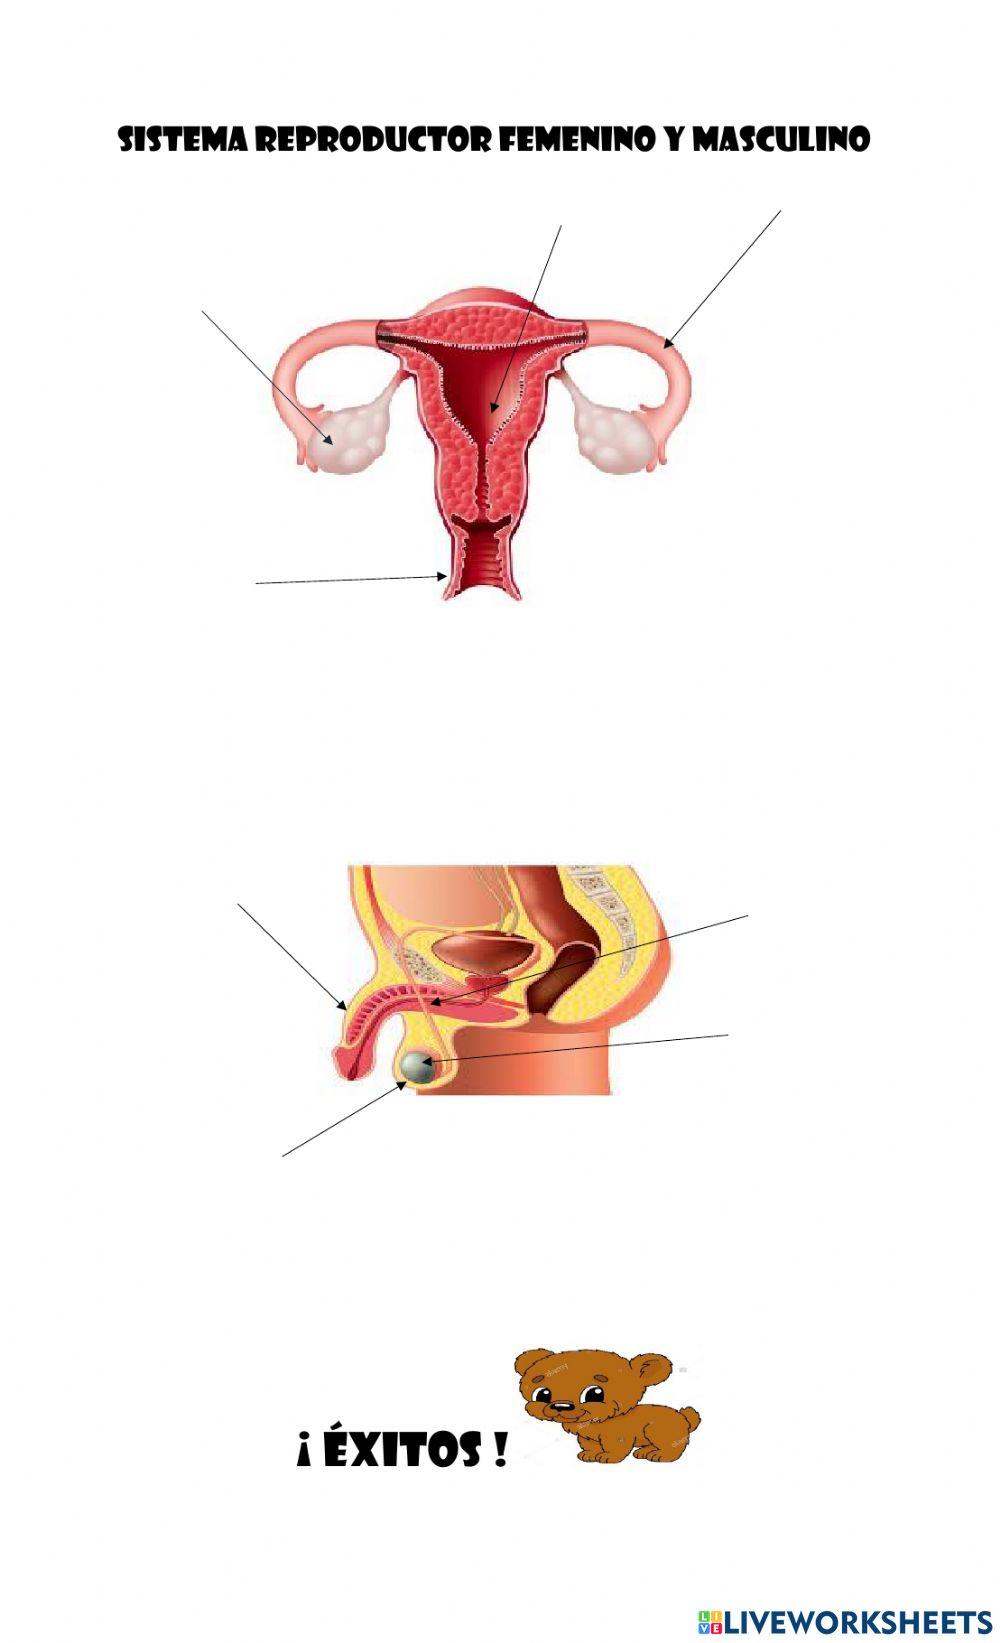 Sistema reproductor masculino y femenino